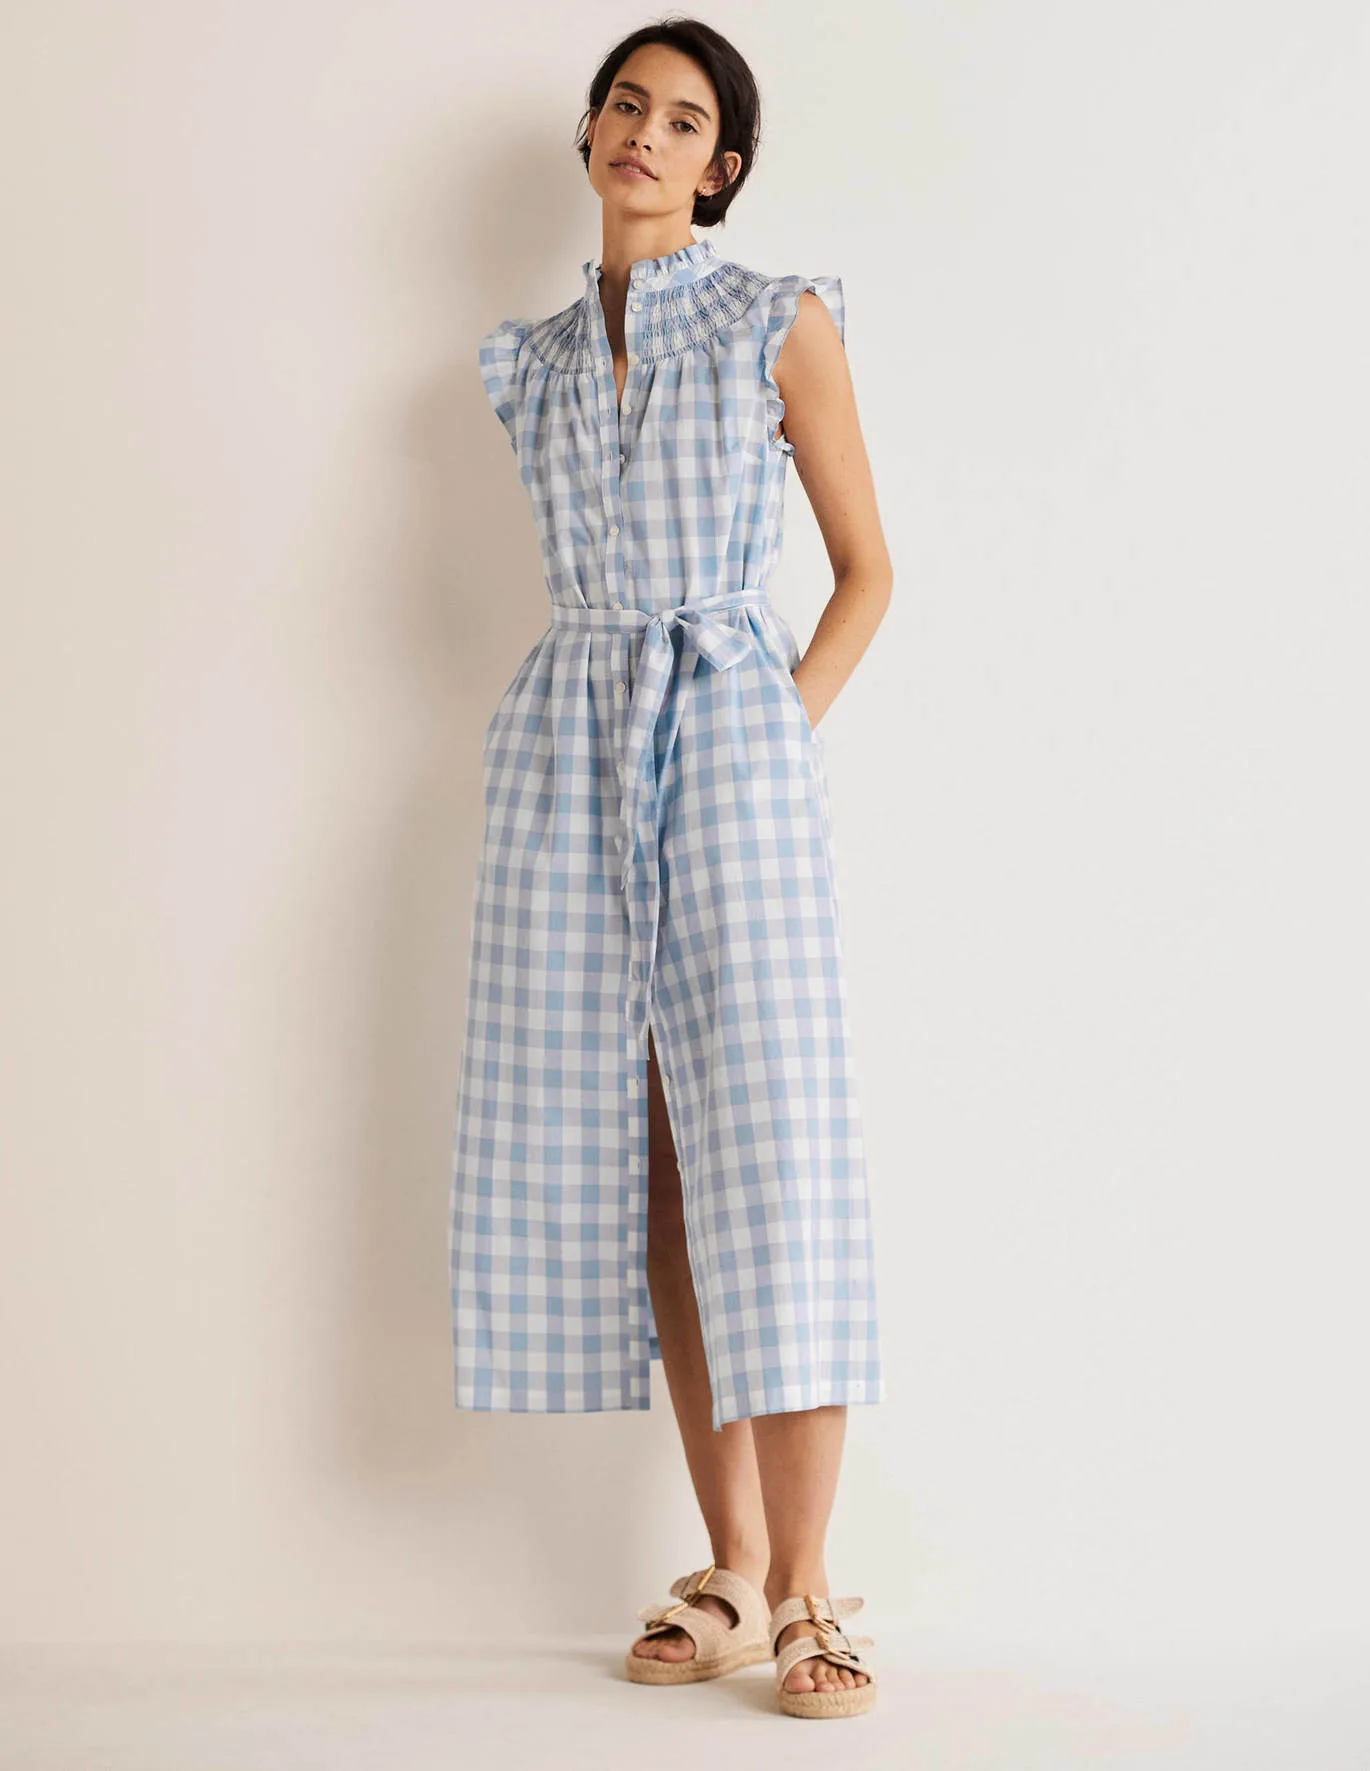 Plaid Dress- Boden - summer dress - summer fashions - blue and white - summer fashion - fashion